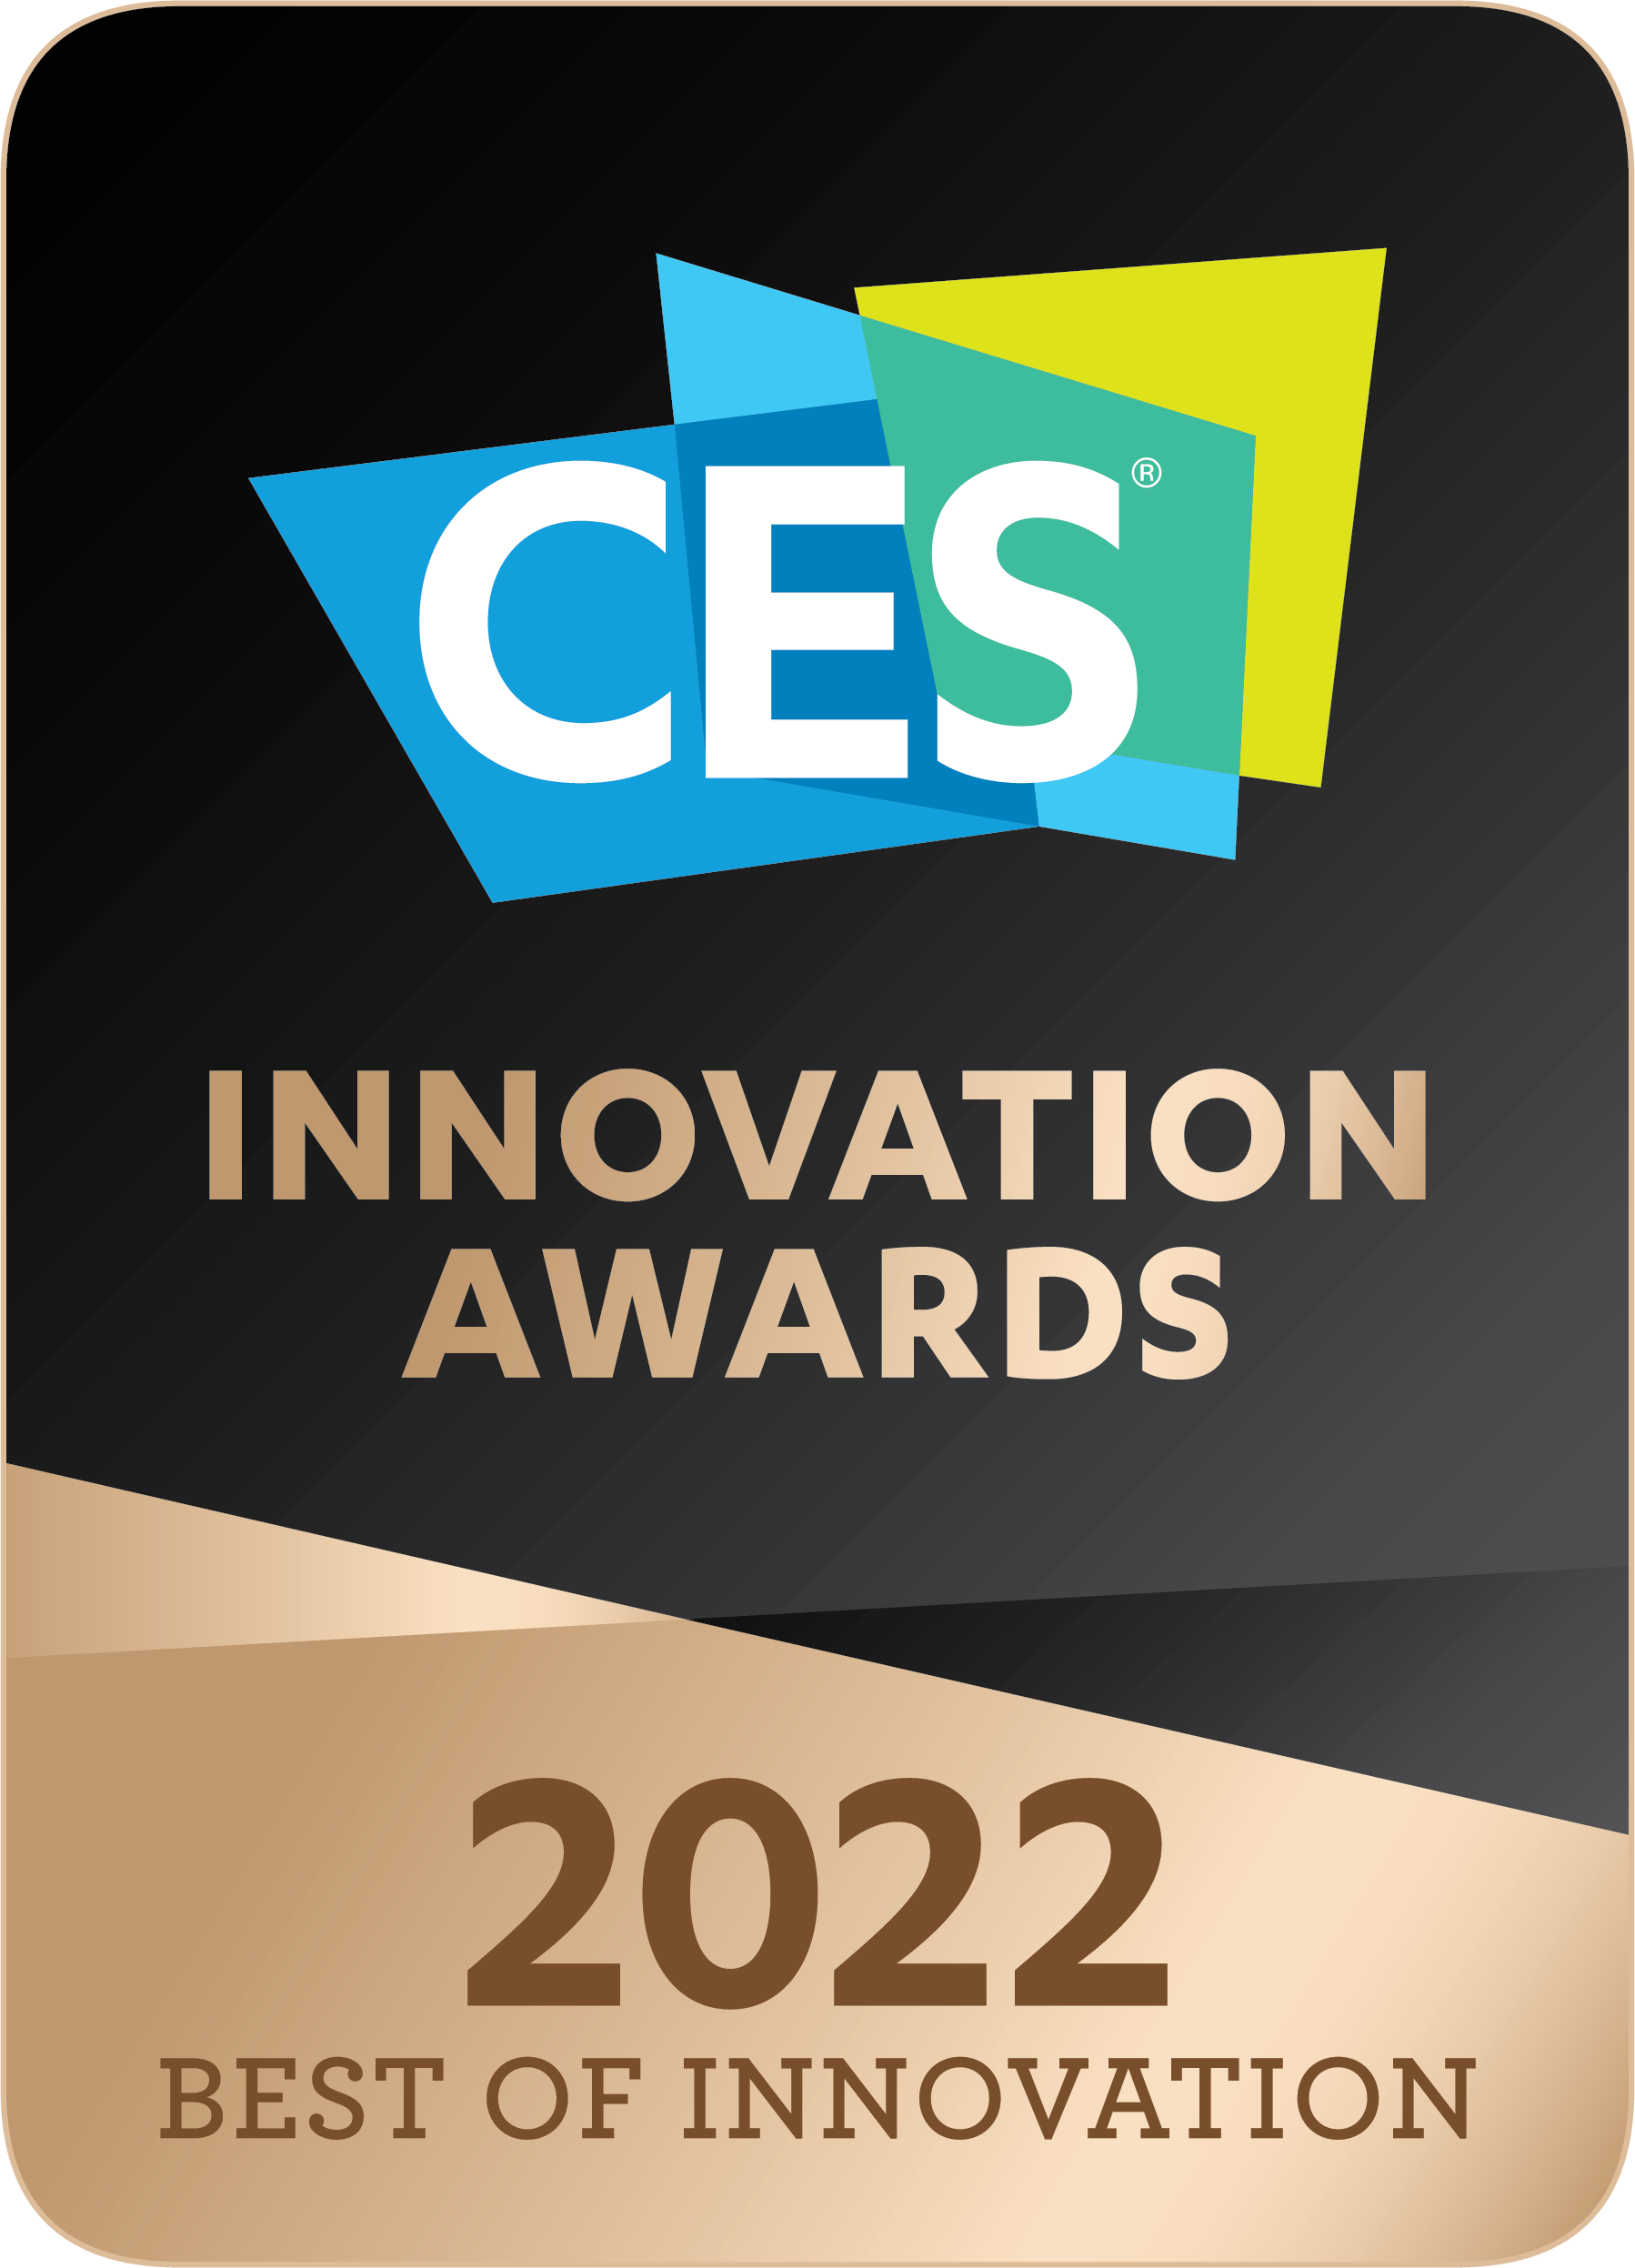  « Innovation Award » du CES 2022